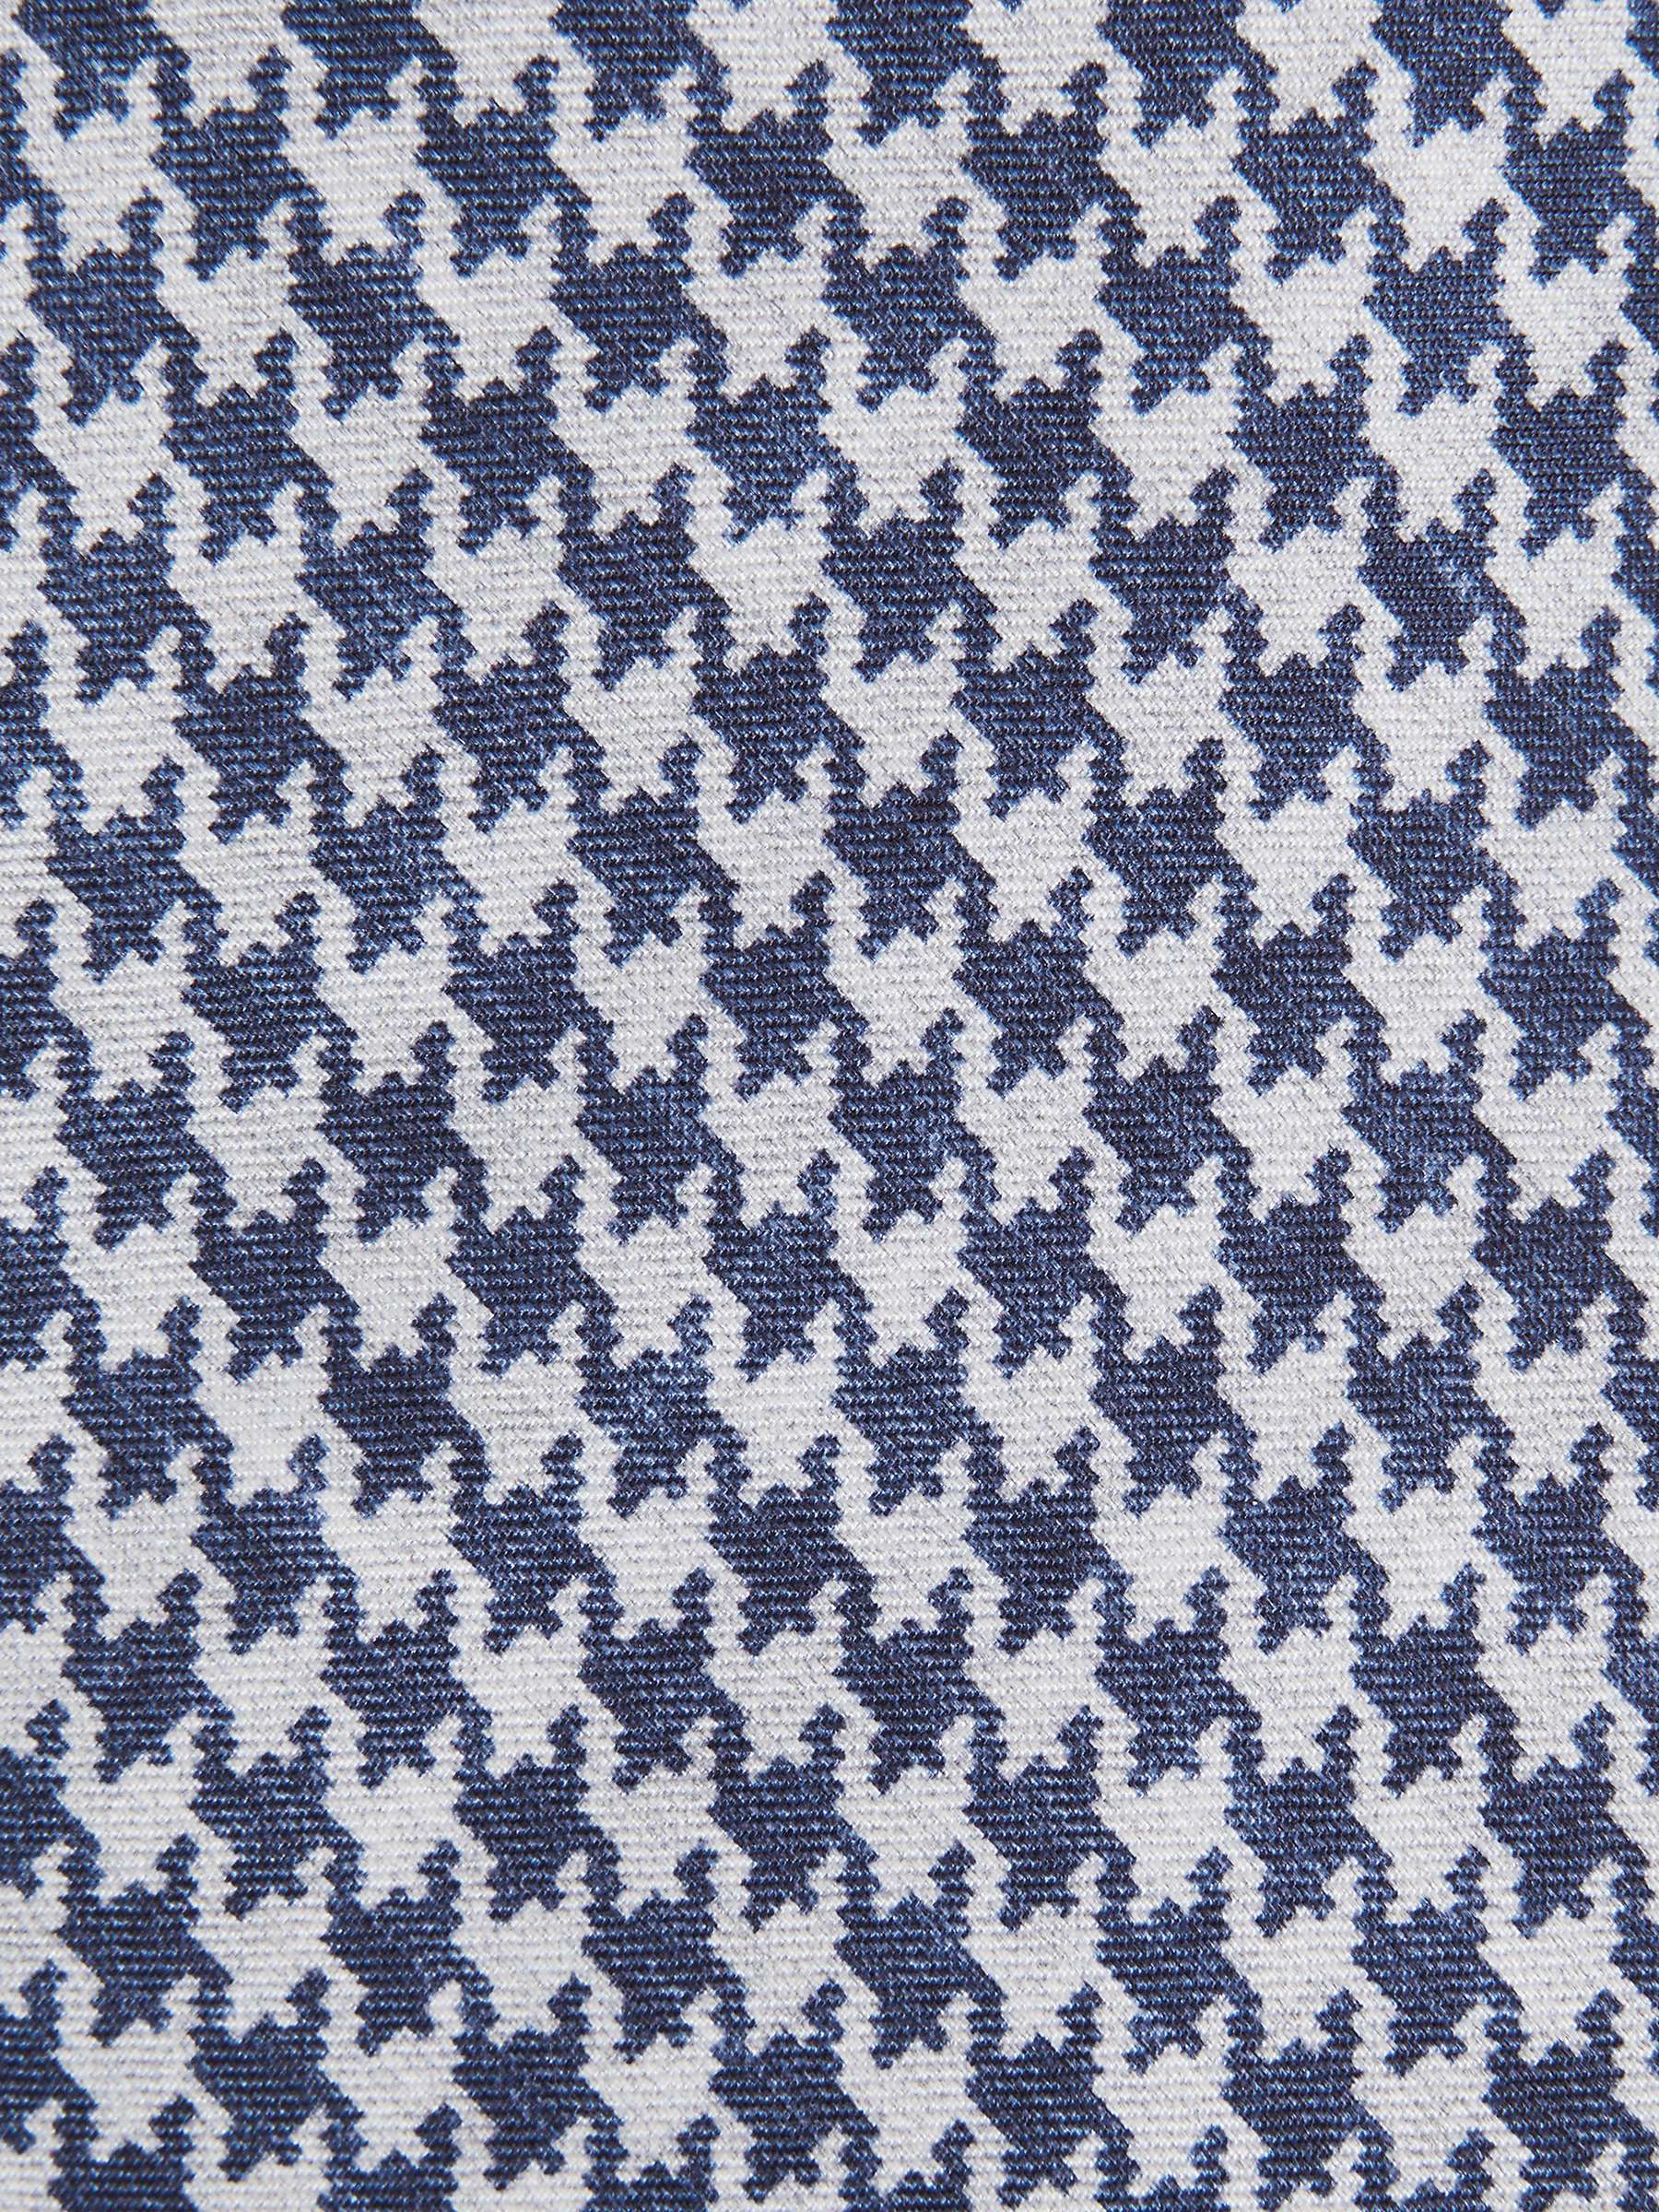 Buy Reiss Gesu Dogtooth Print Silk Tie, Blue/White Online at johnlewis.com